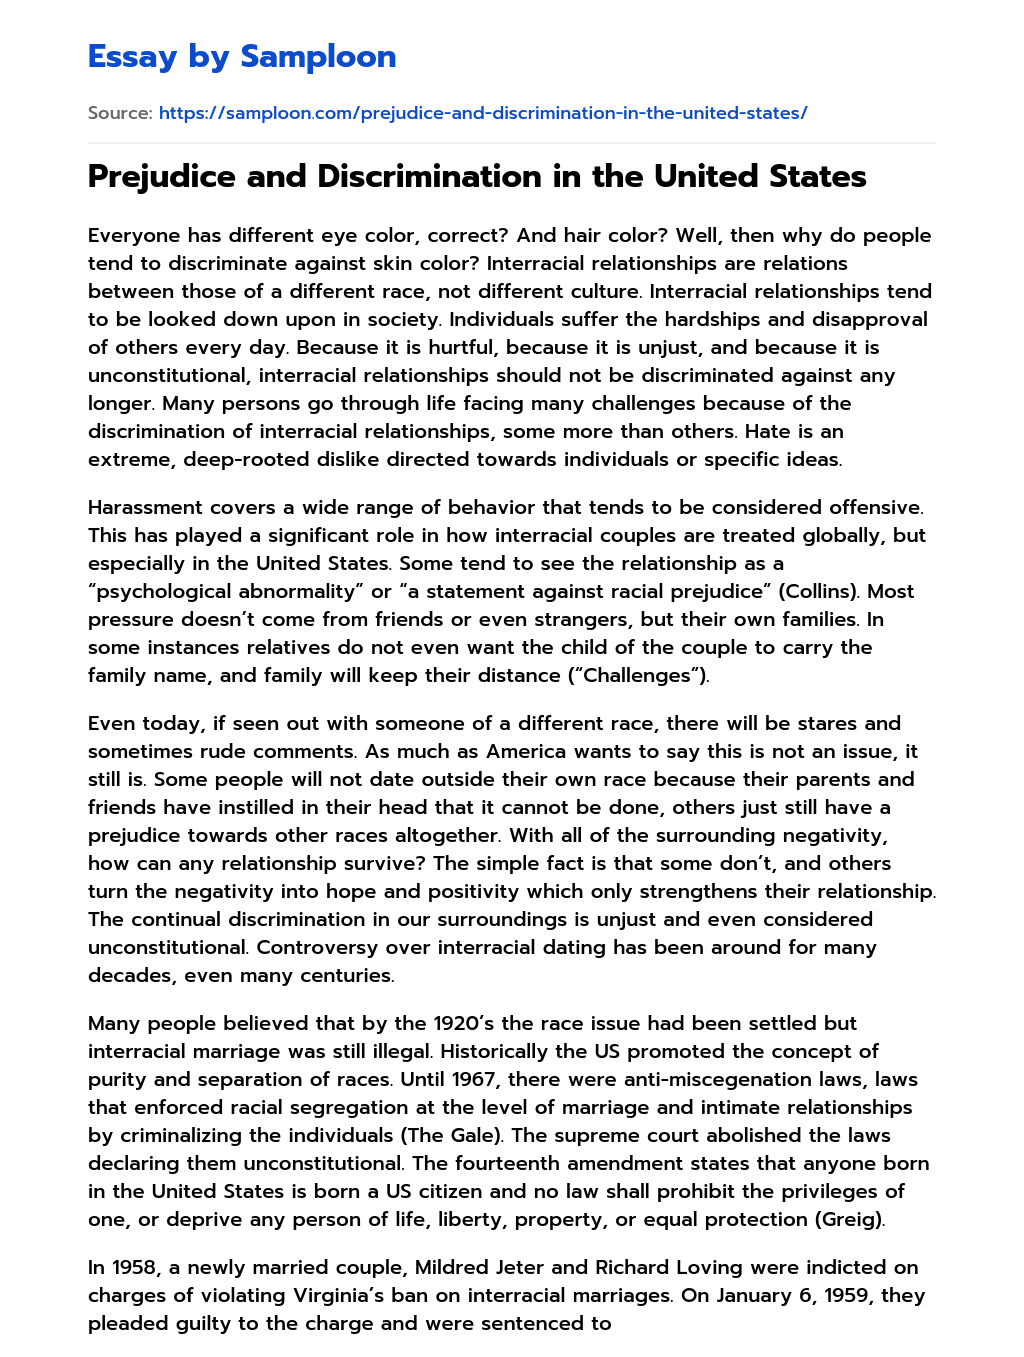 Prejudice and Discrimination in the United States essay